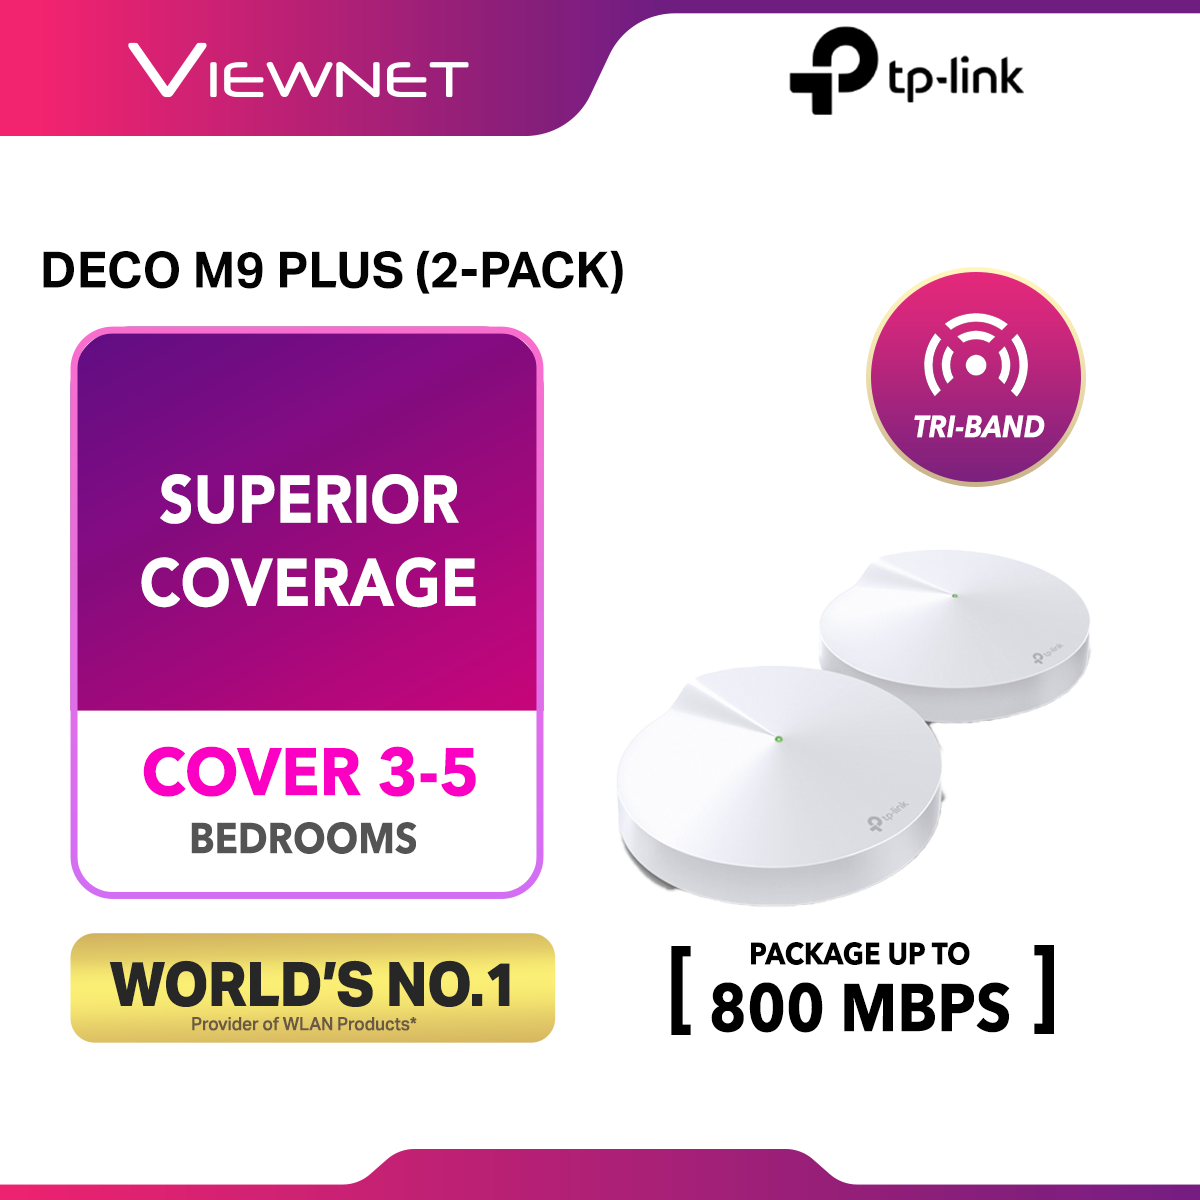 TP-LINK Deco M9 Plus (2 PACK) - AC2200 Mesh WiFi Wireless Tri-Band Gigabit Router 2.4GHz + 5GHz Wi-Fi